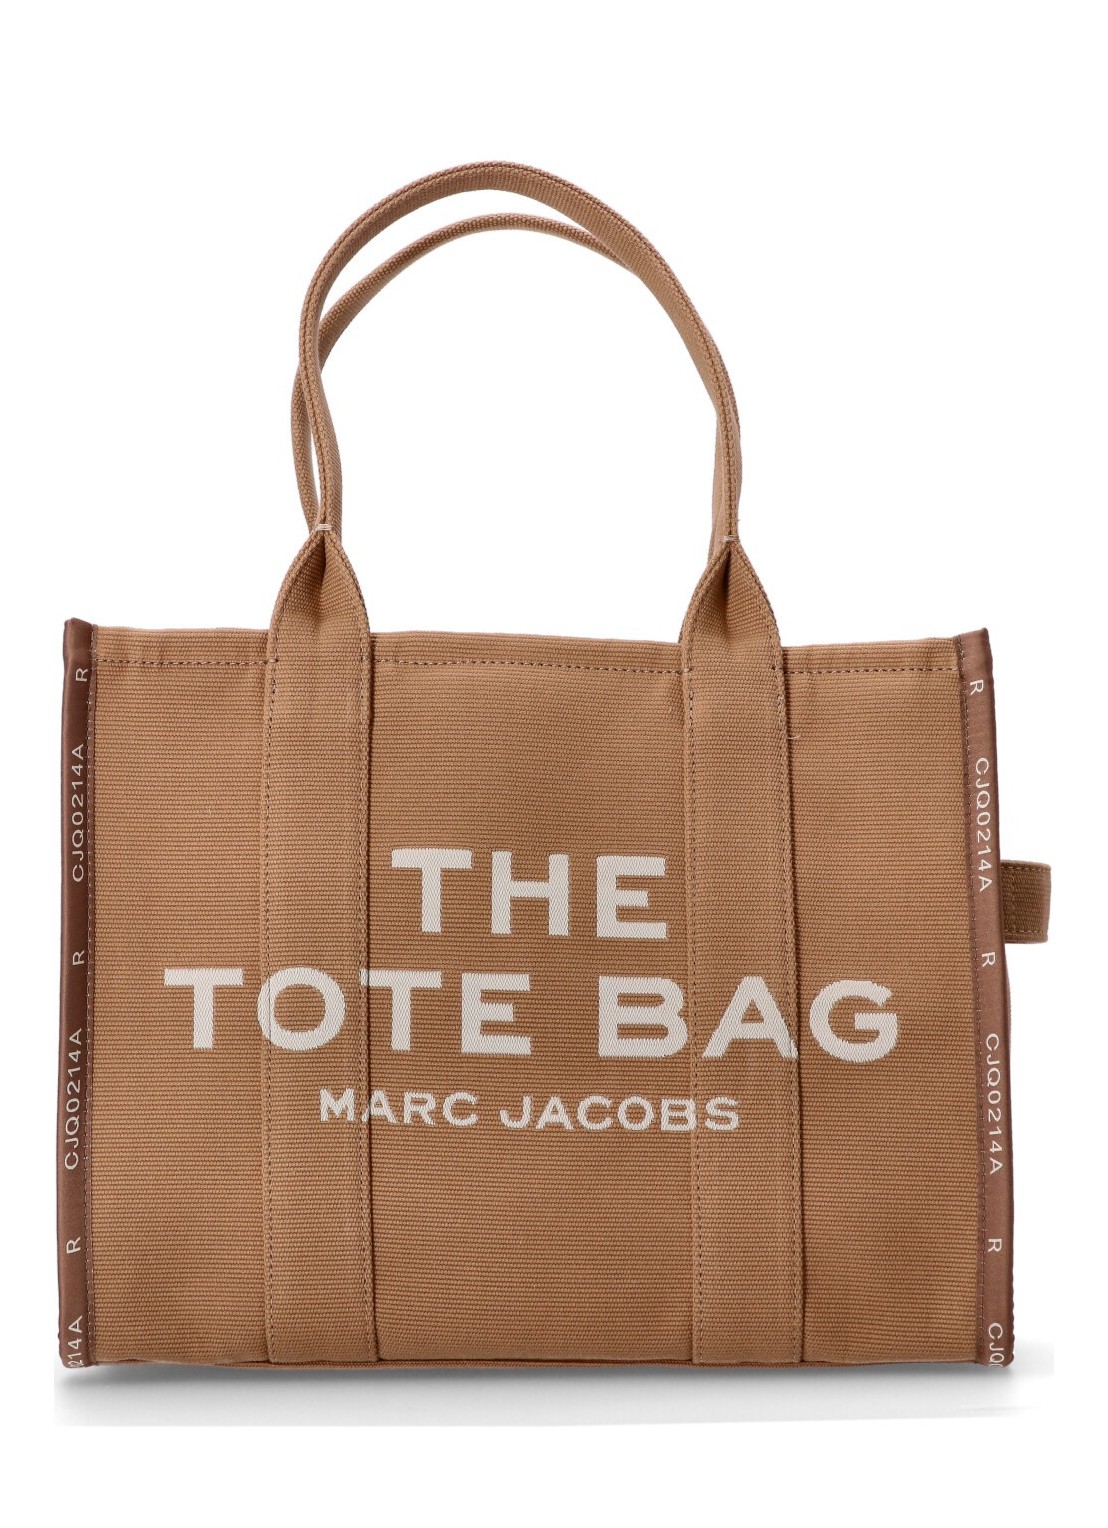 Handbag marc jacobs handbag woman the large tote m0017048 230 talla marron
 